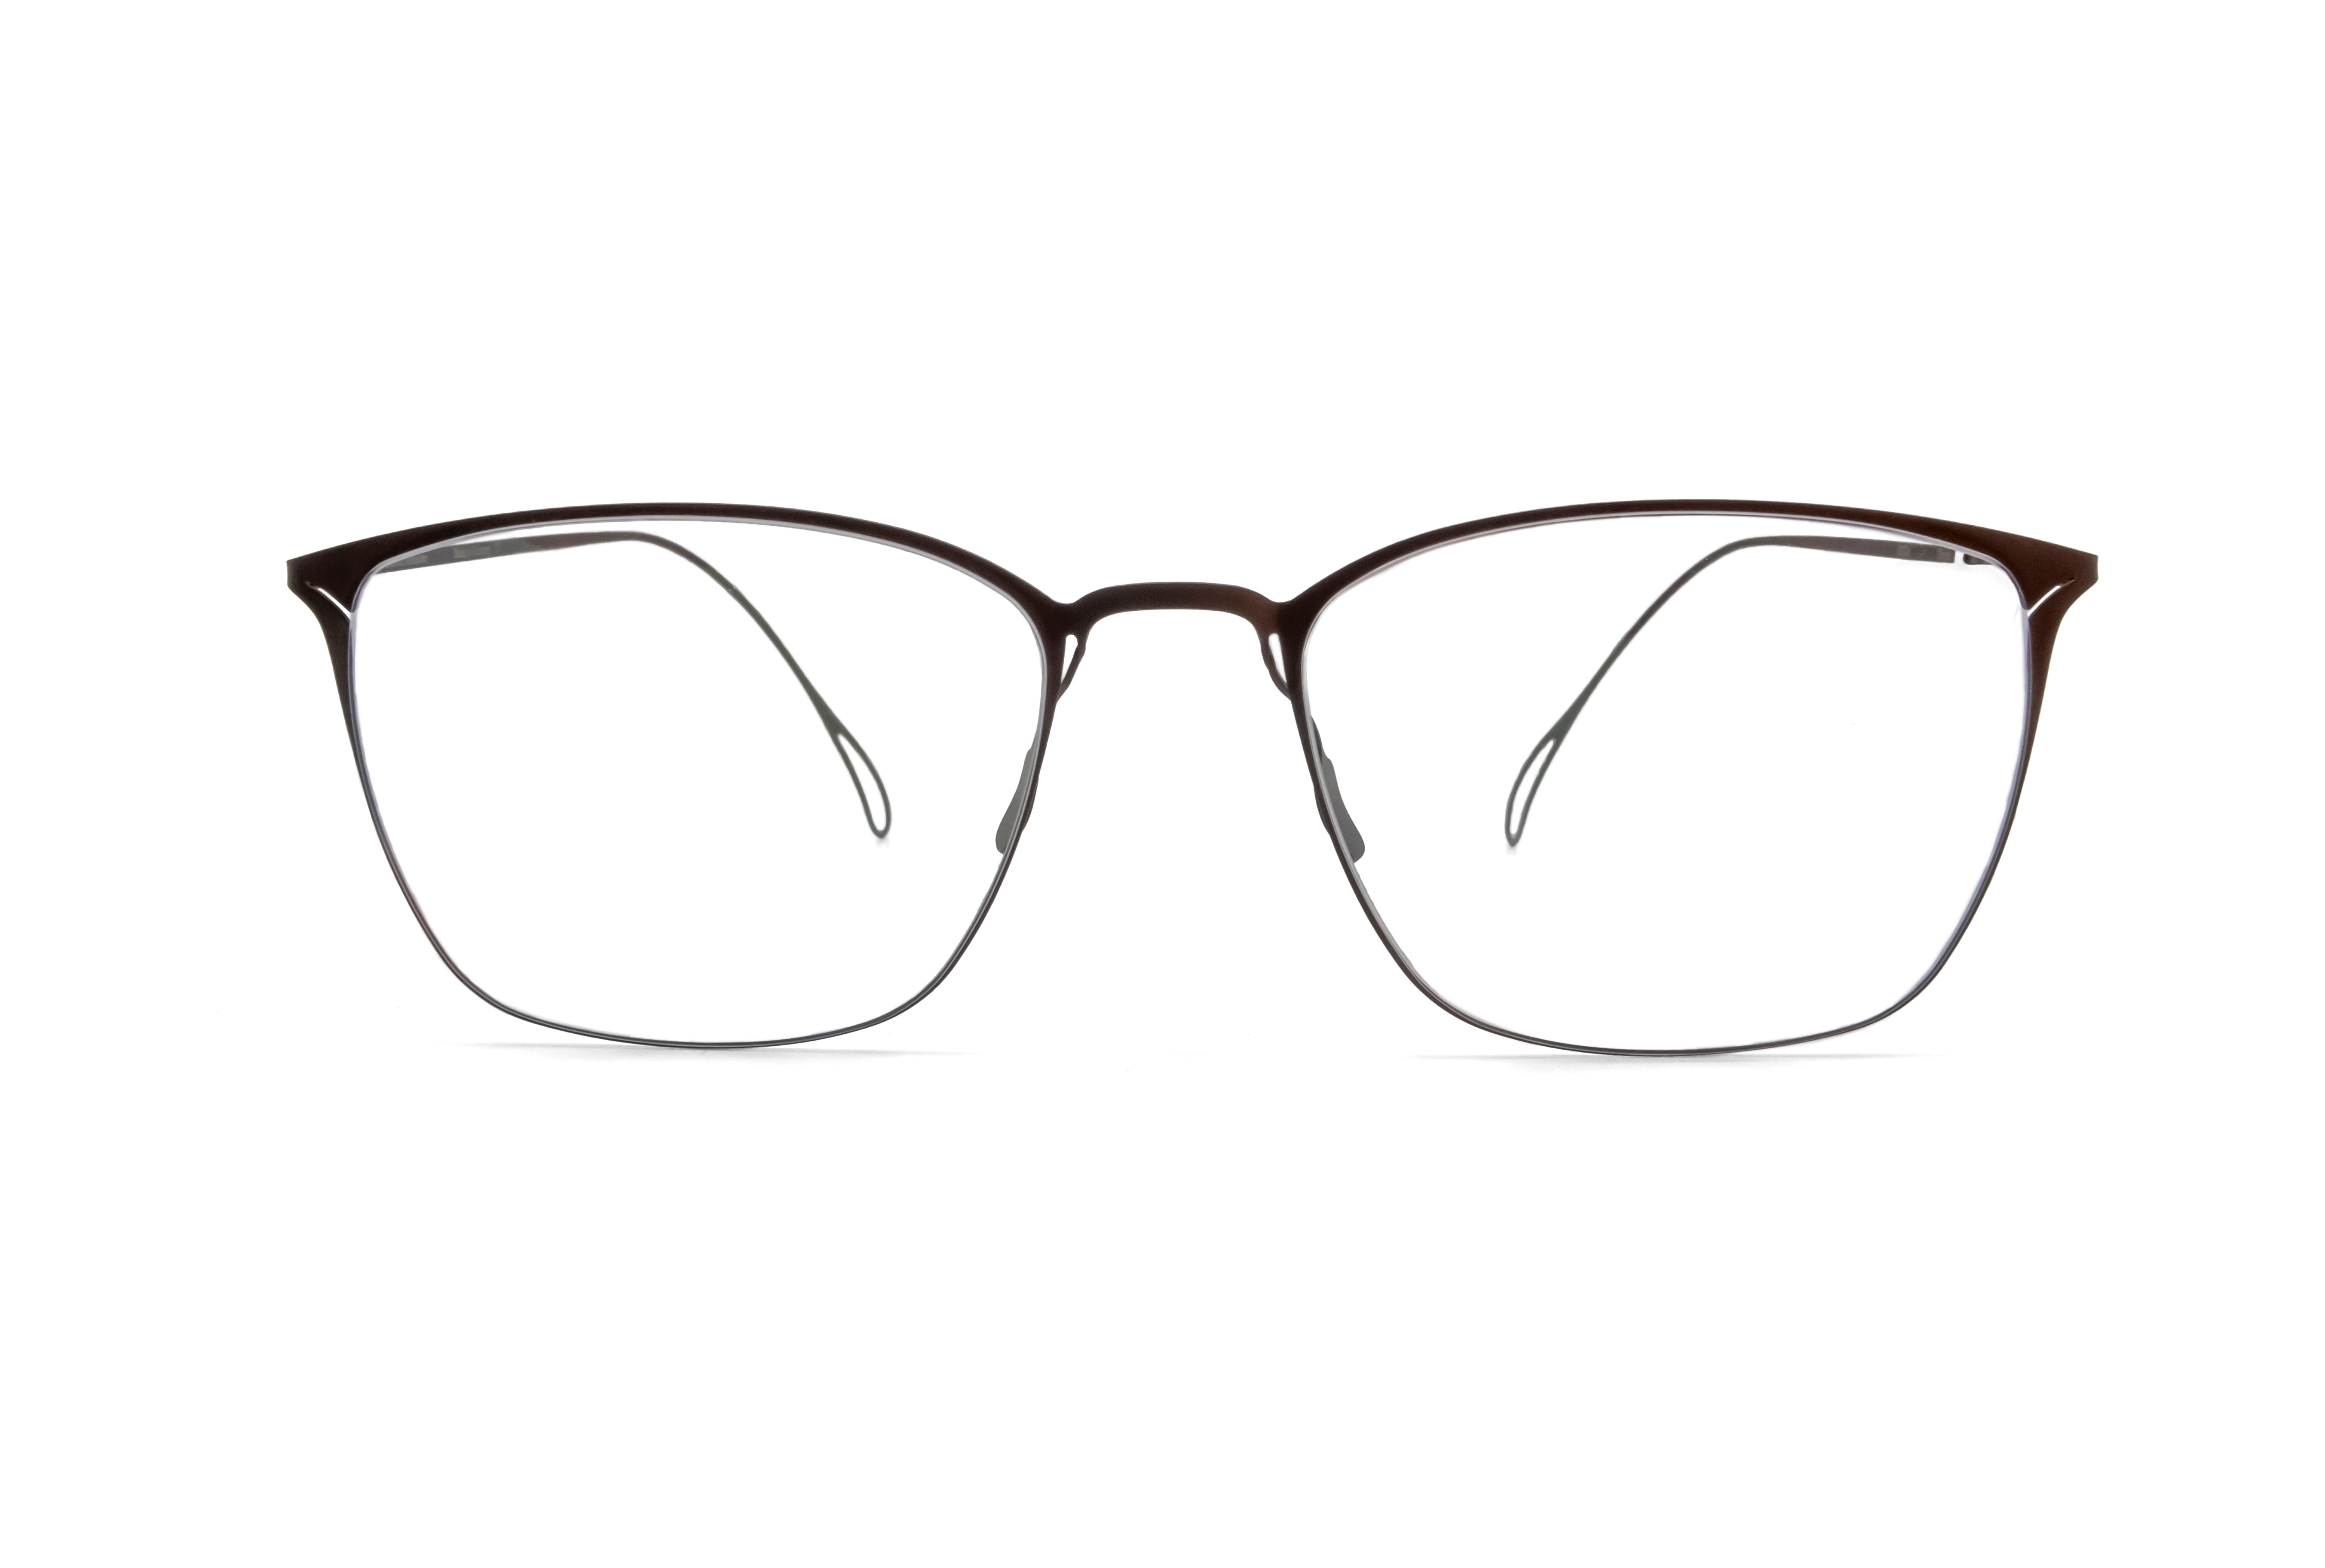 Haffmans & Neumiester | Shop Custom Made Glasses New York, NY